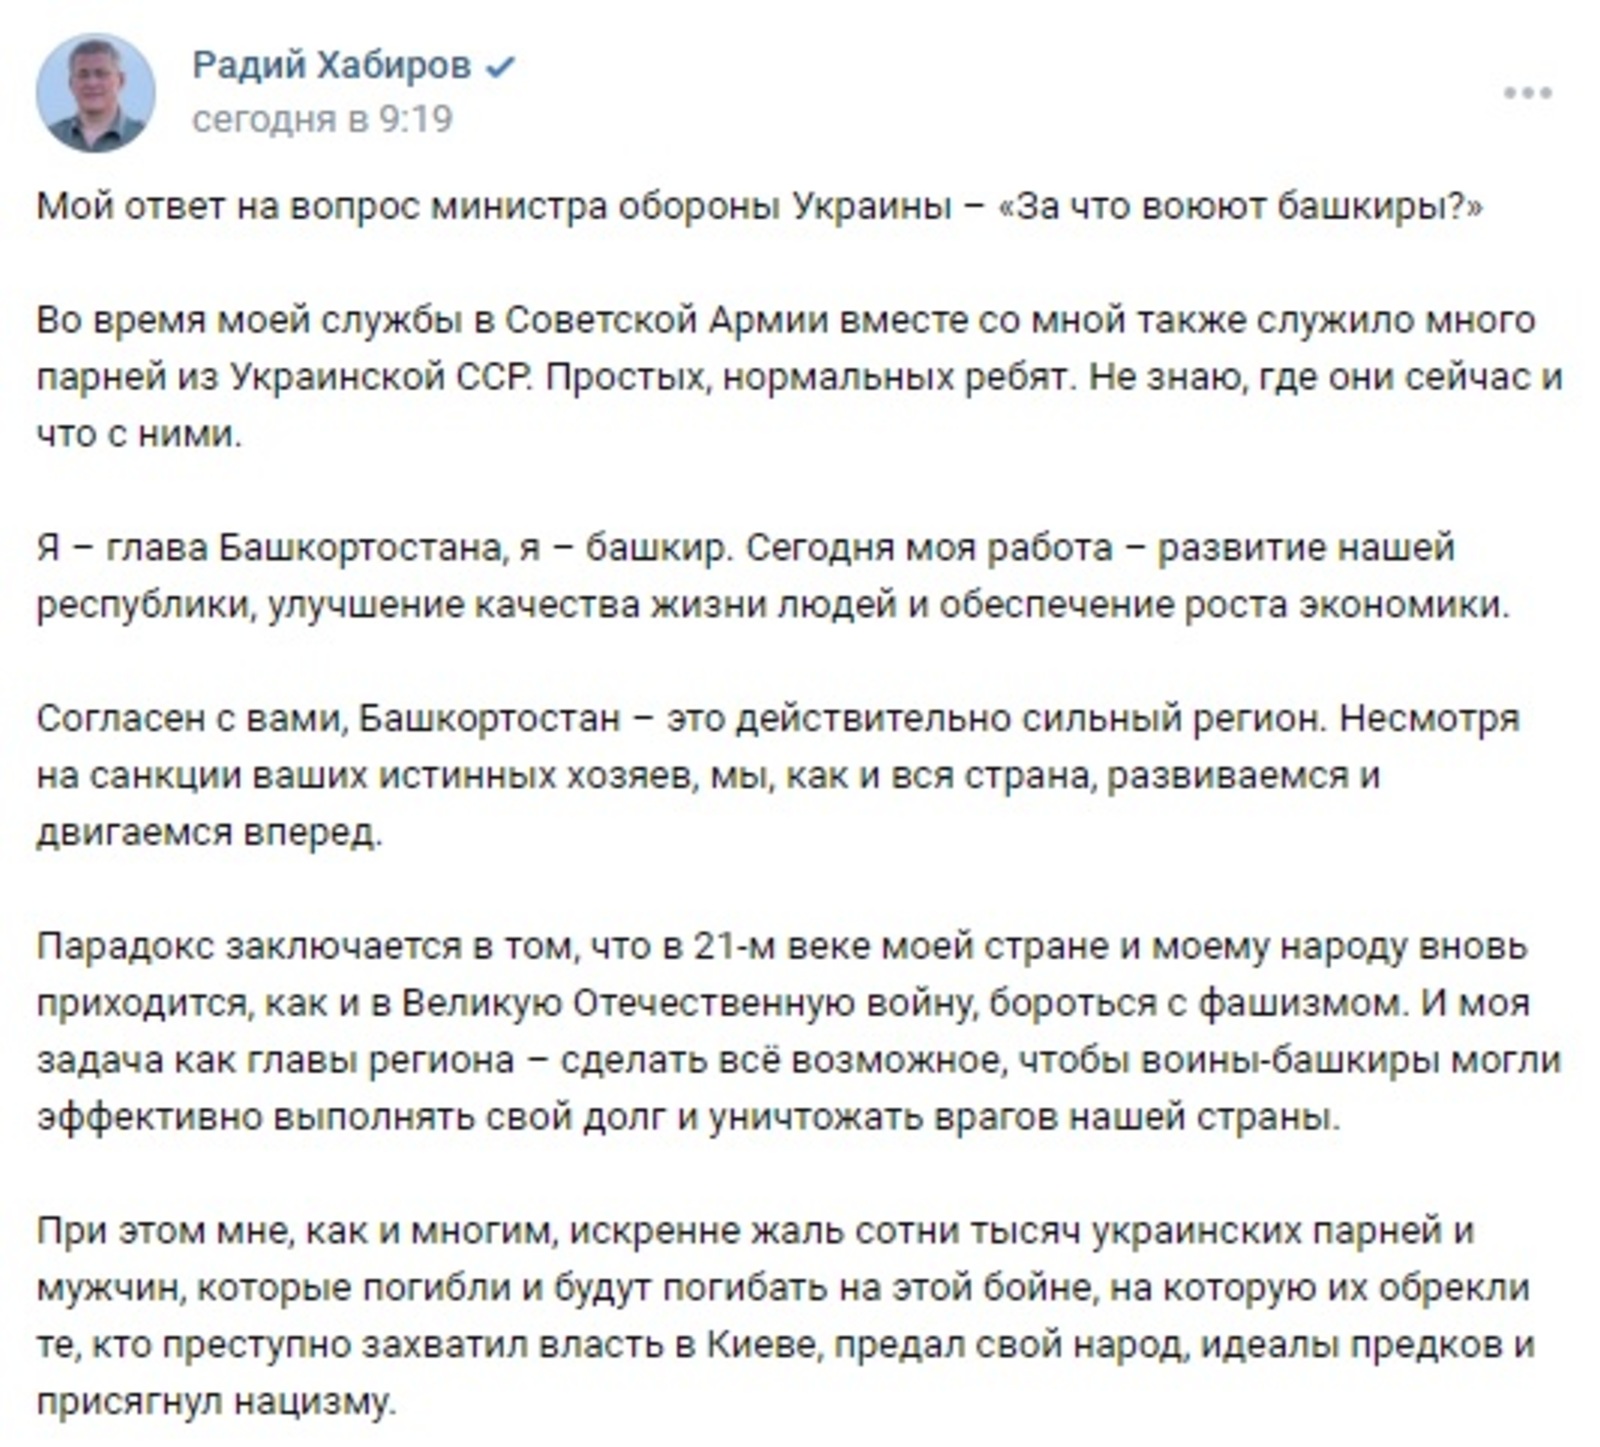 Глава Башкирии Радий Хабиров объяснил, за что воюют башкиры